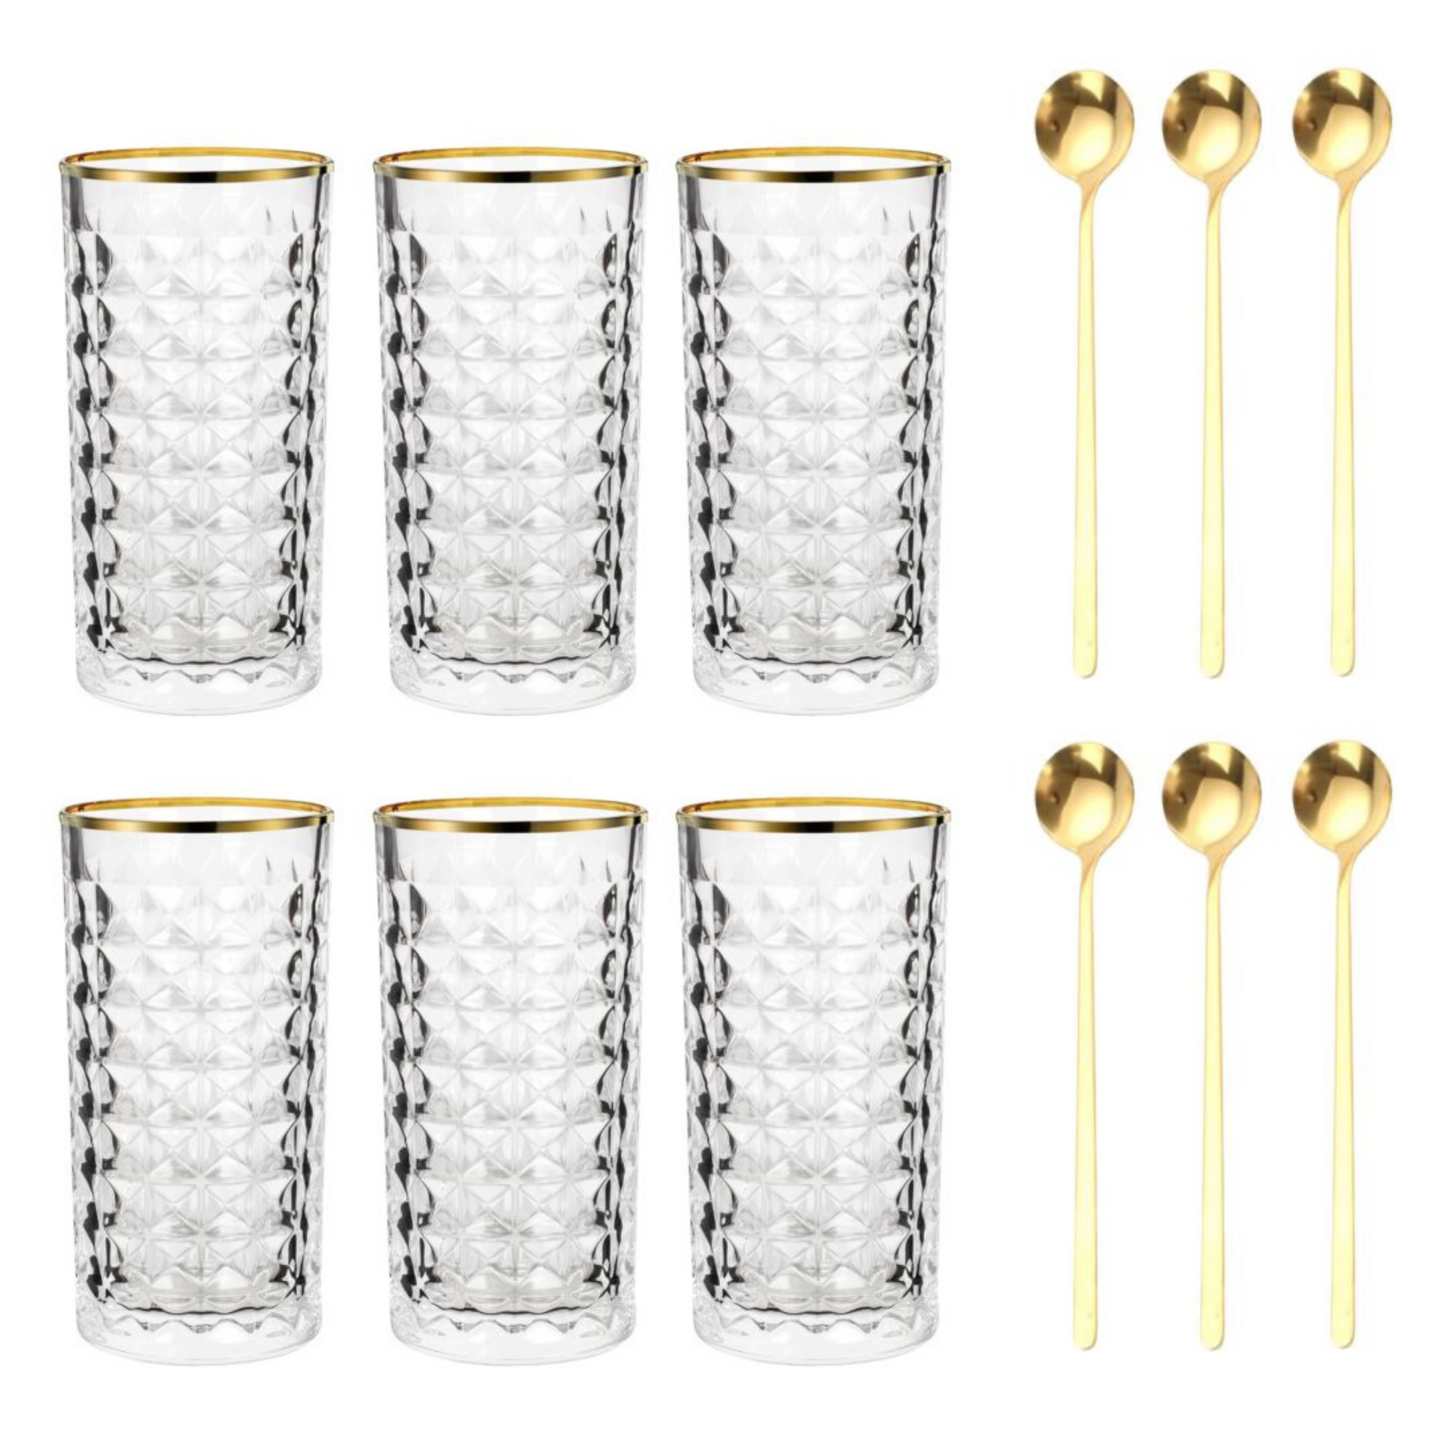 Kristall Latte Macchiato Gläser gold Rand goldene Löffel 6er-Set